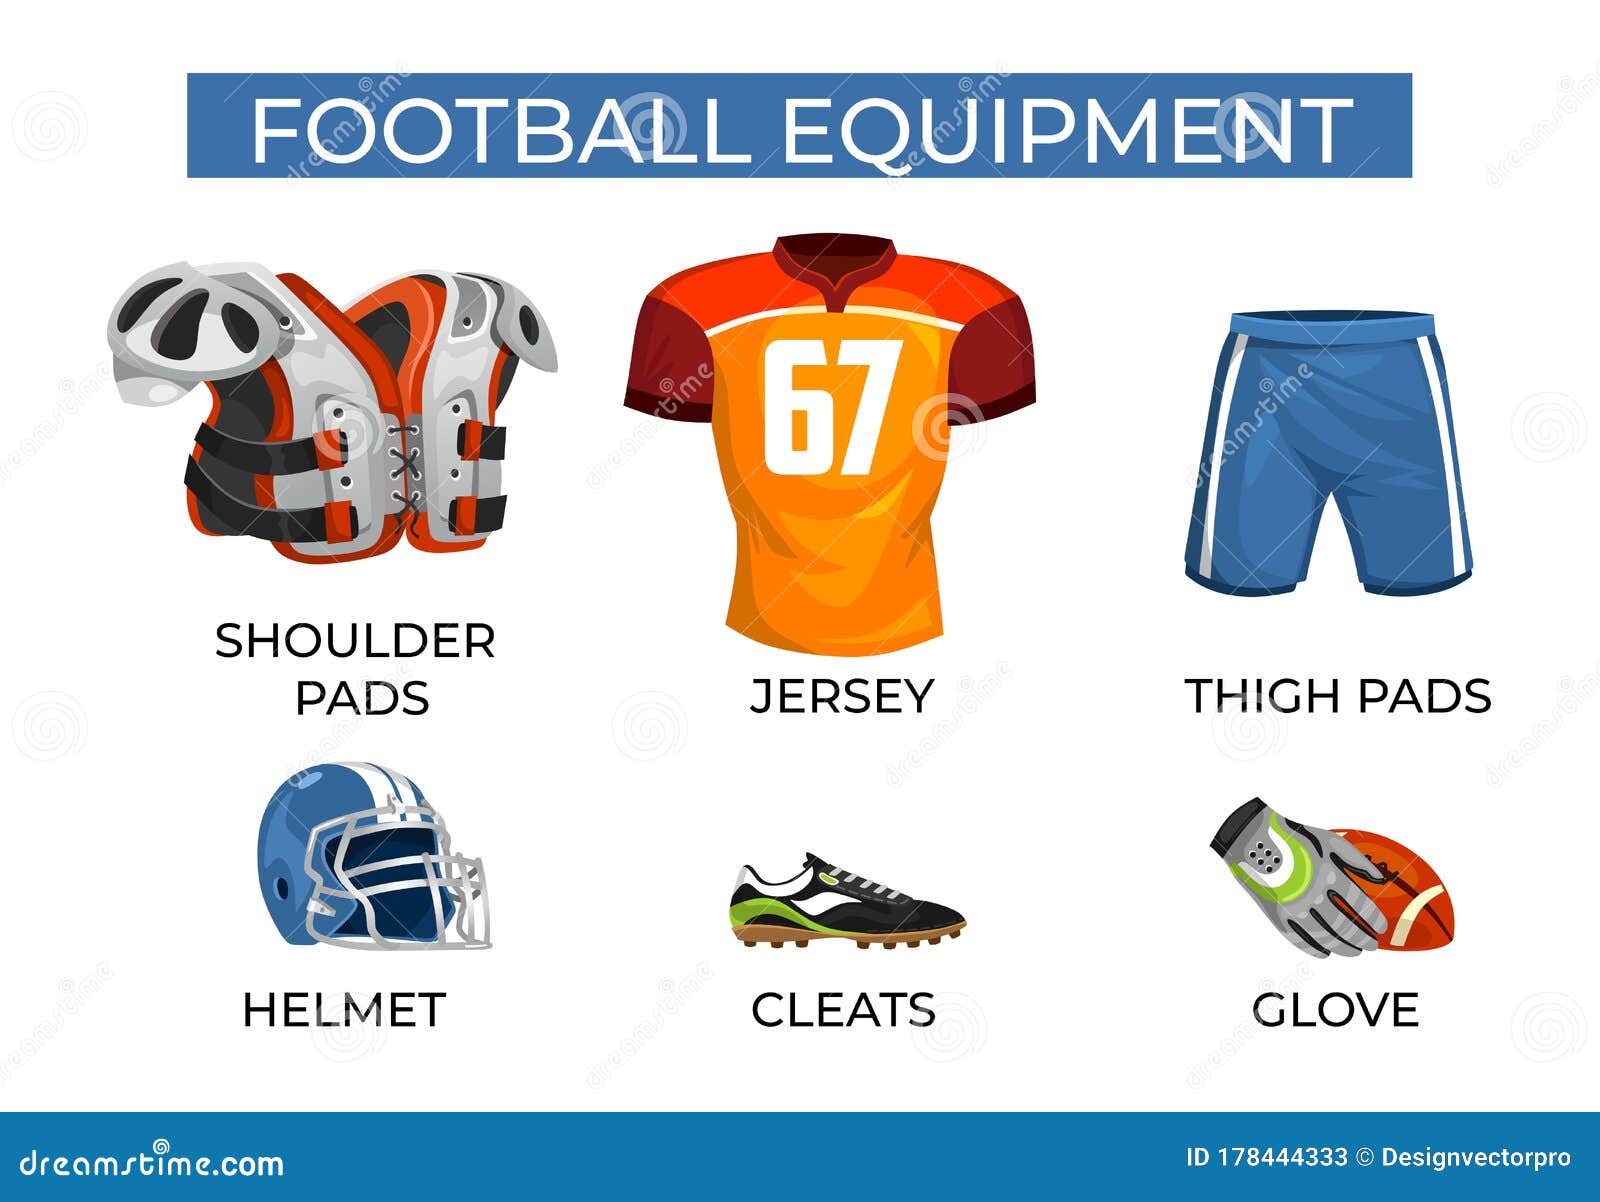 Football: Equipment